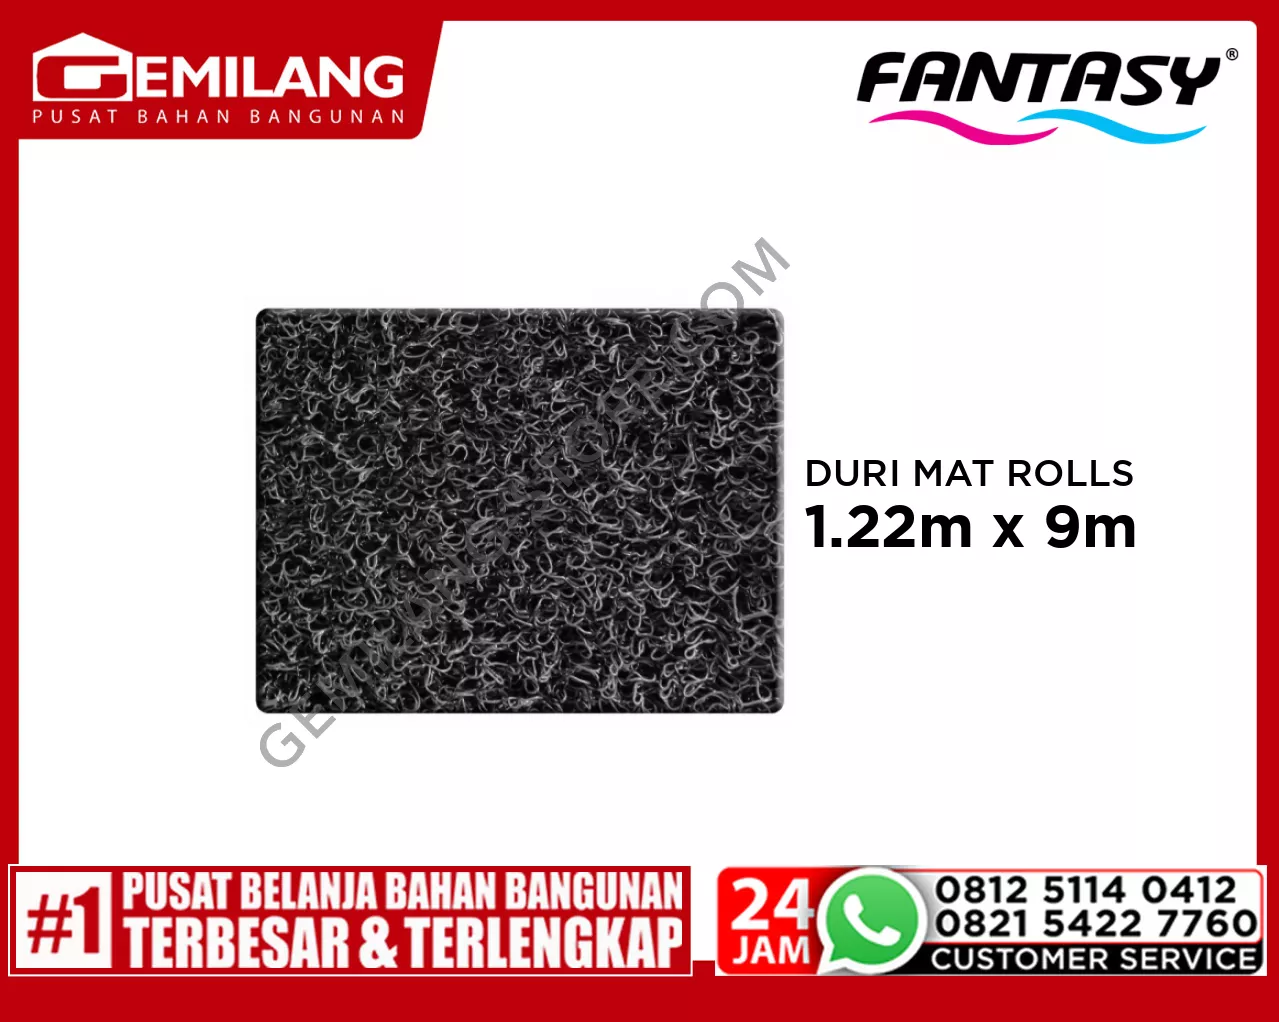 FANTASY ANTISLIP DURI MAT ROLLS GREY 1.22m x 9m x 15mm/mtr